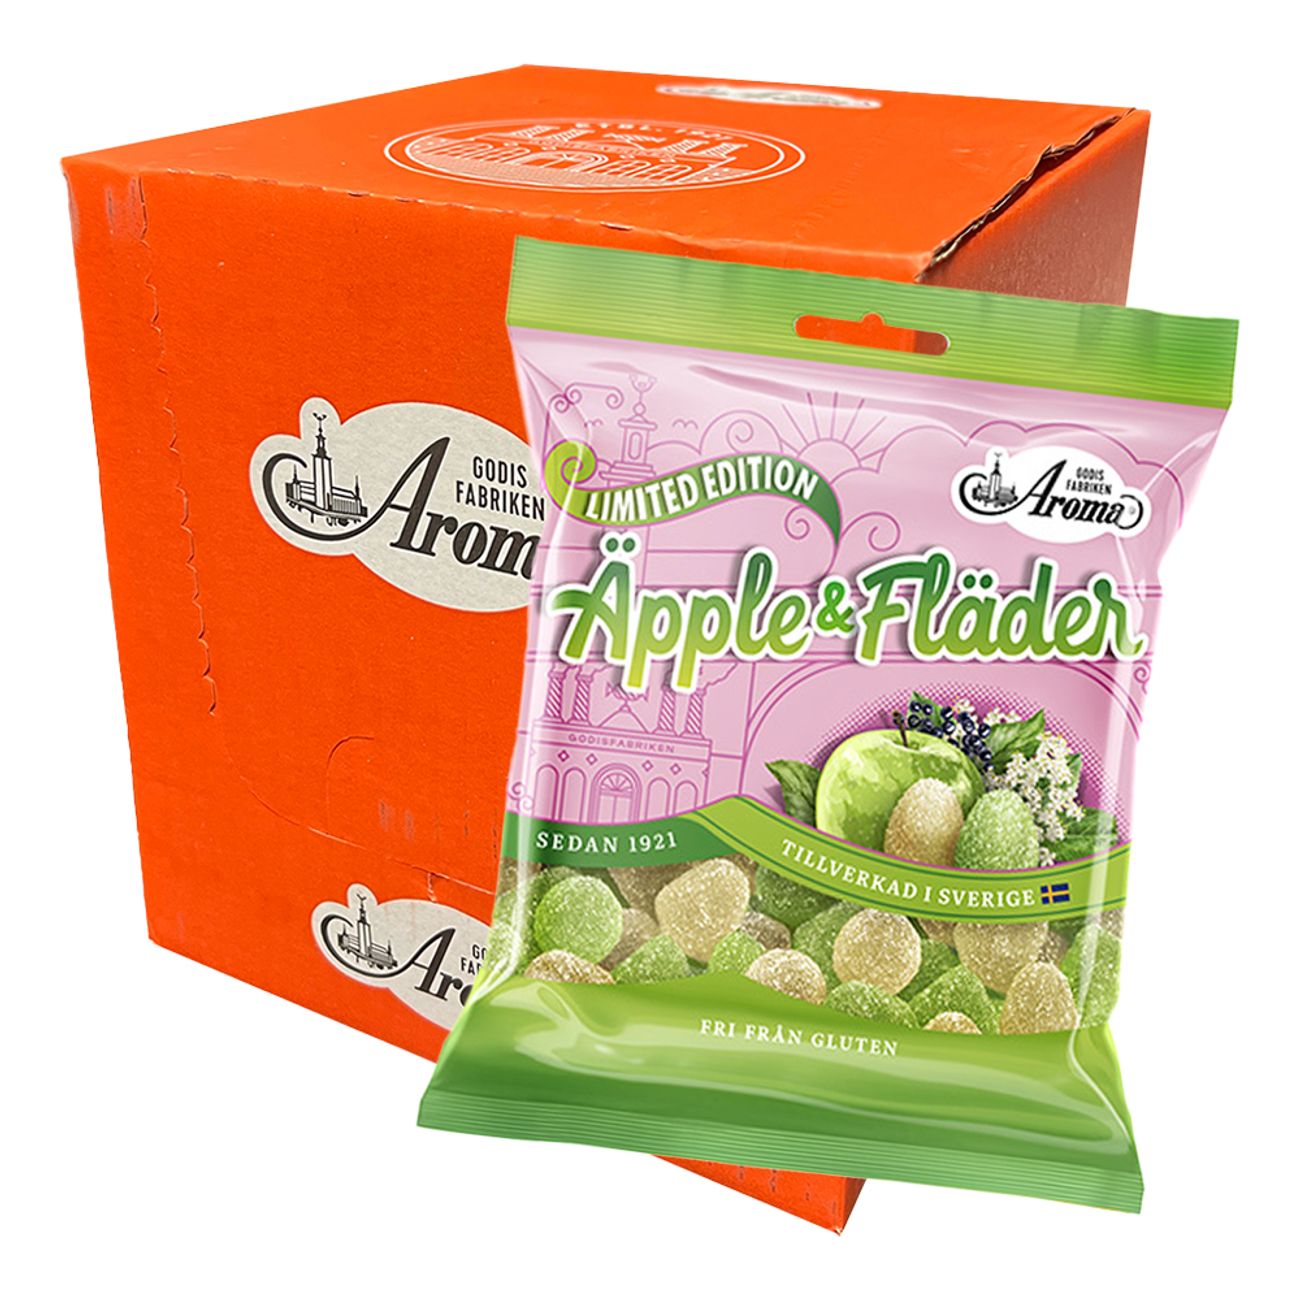 aroma-appleflader-gelehallon-storpack-102949-1